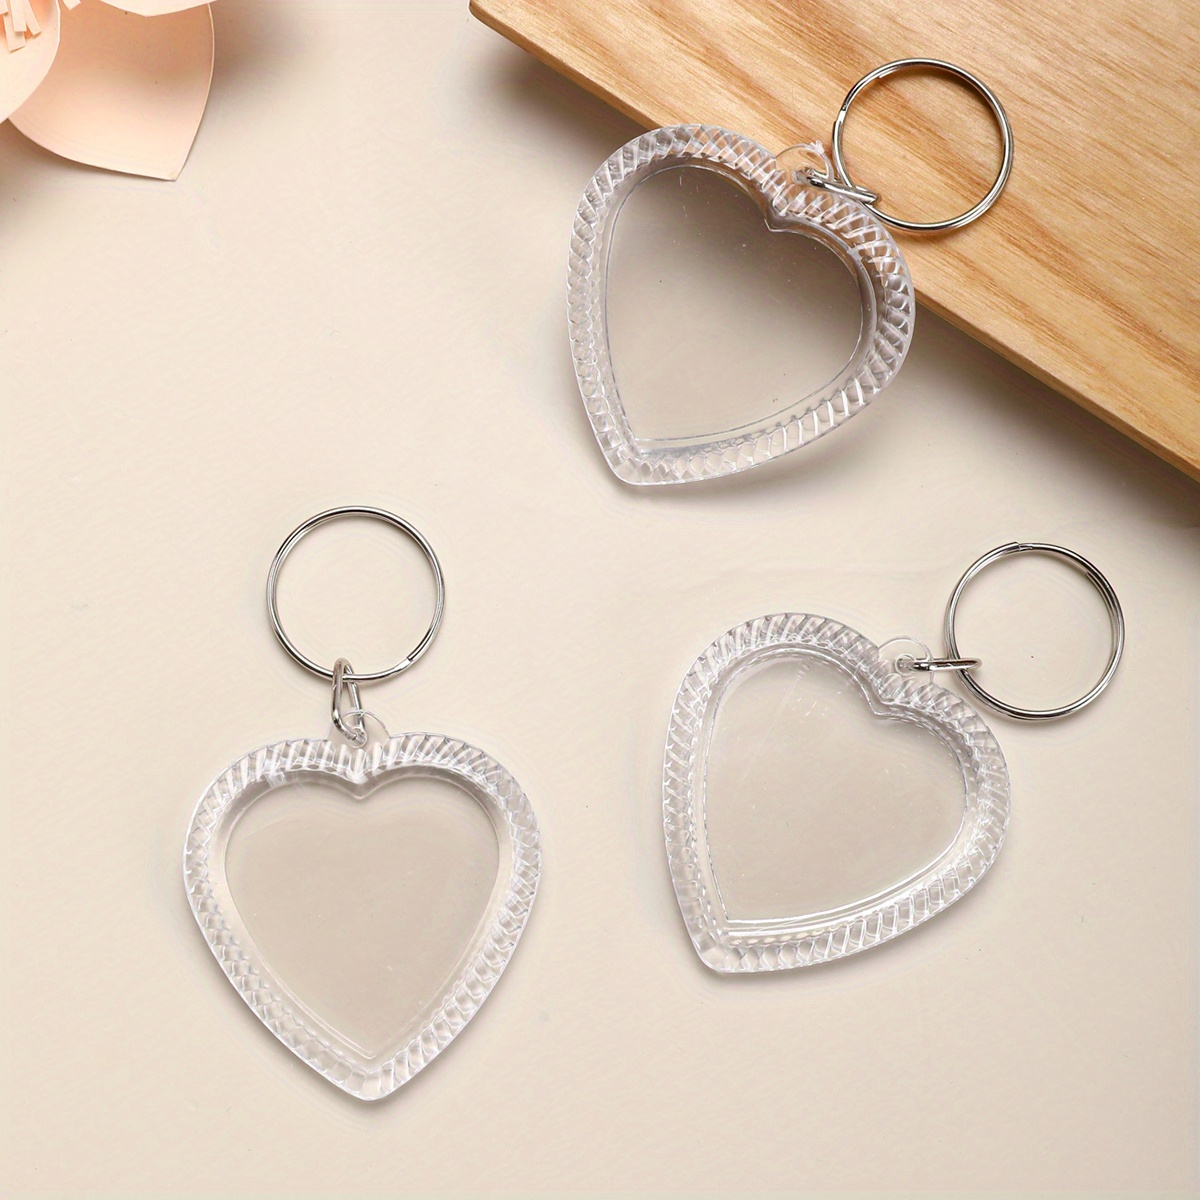 10Pcs Mini Love Keychains Cute Heart Key Chain Pendant Key Ring Gift